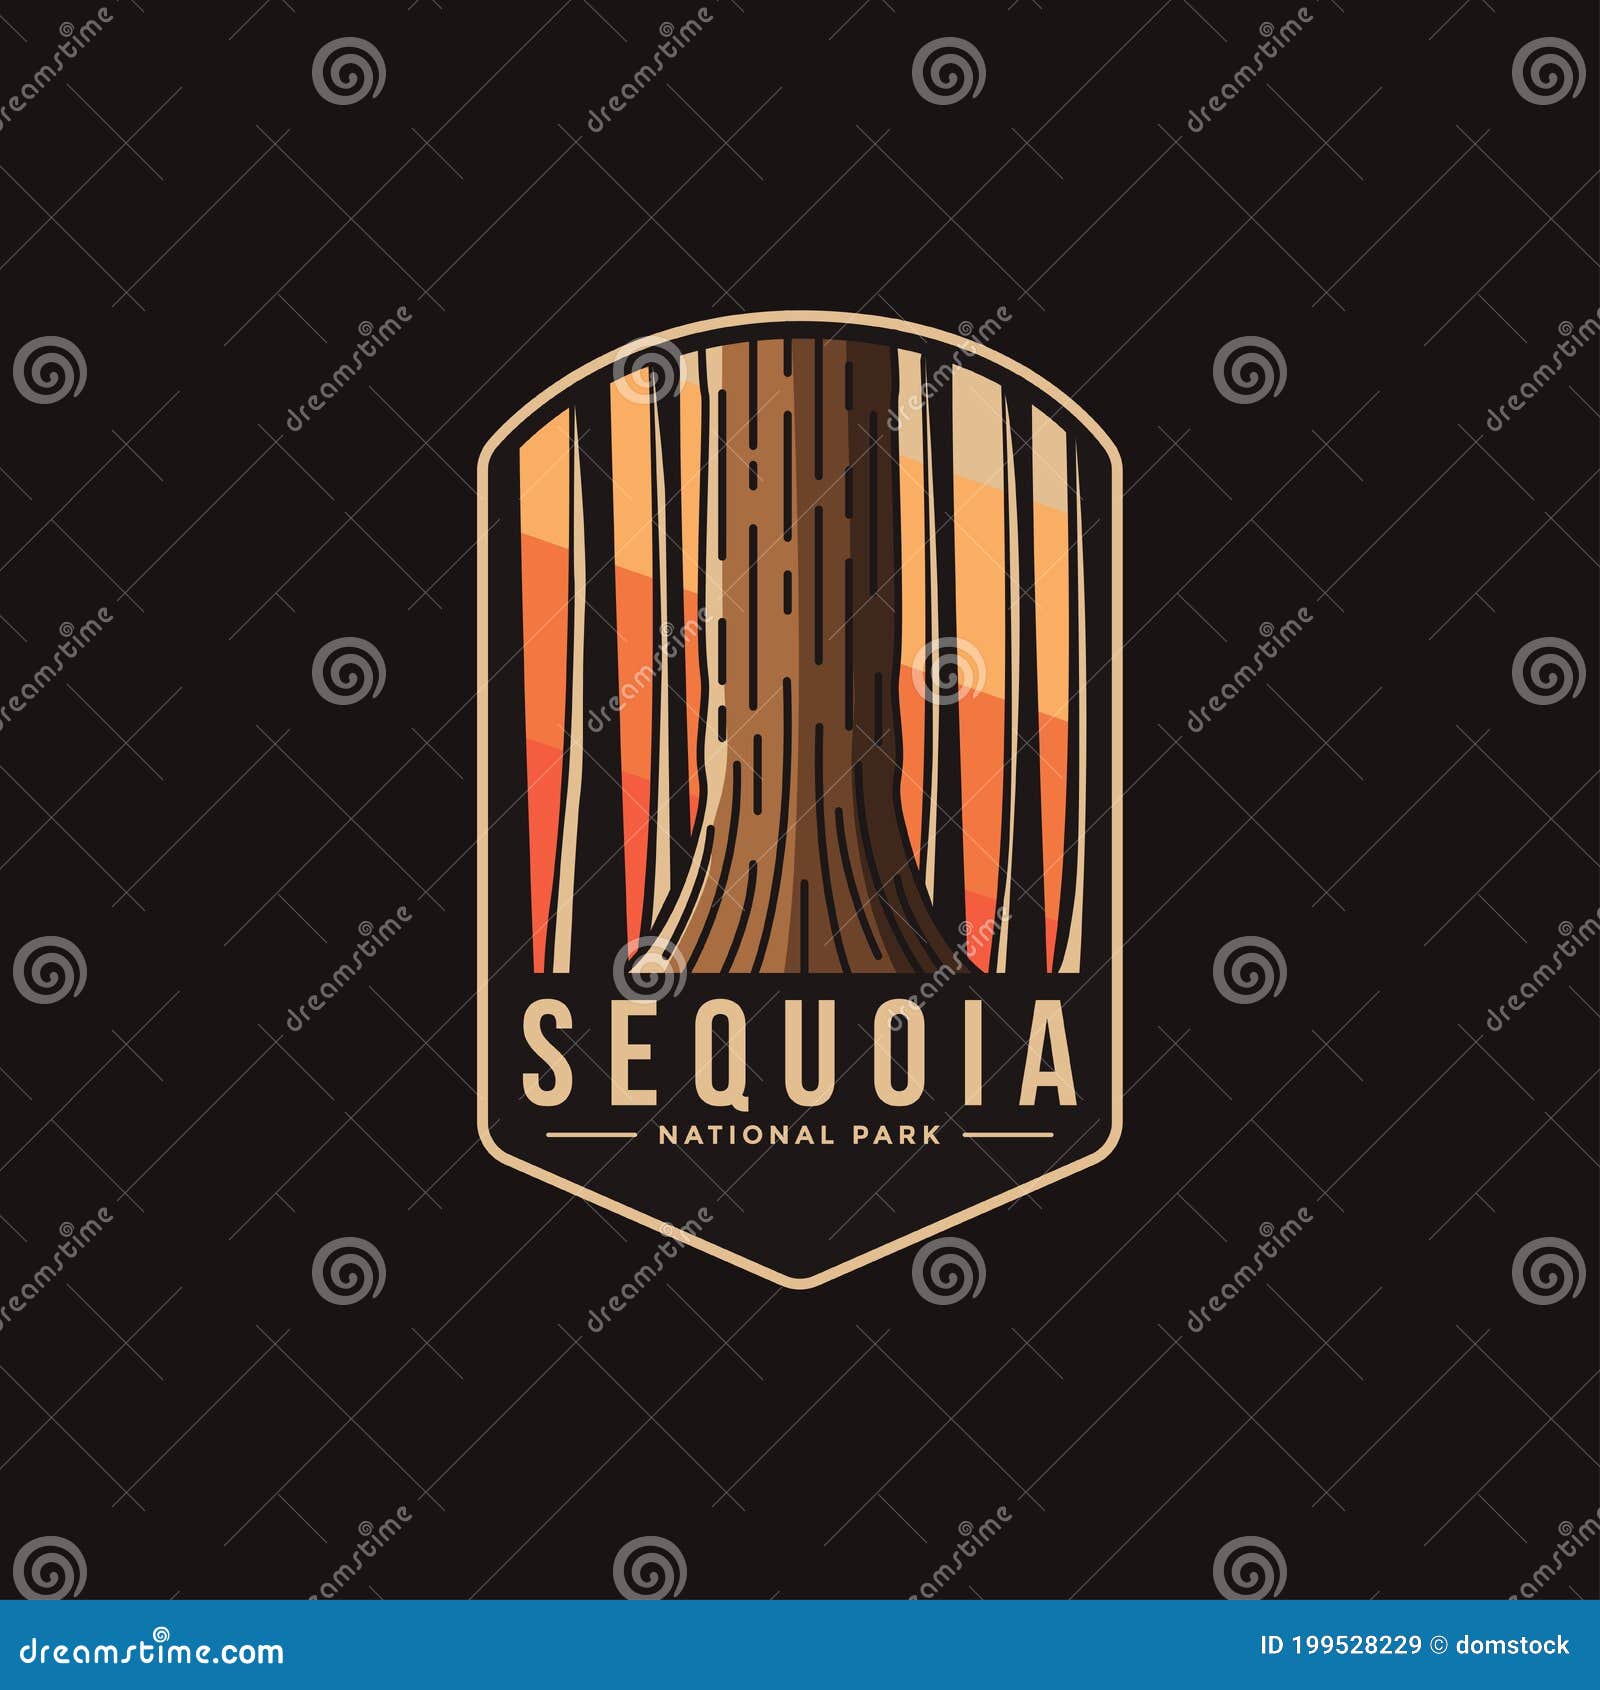 emblem patch logo  of sequoia national park